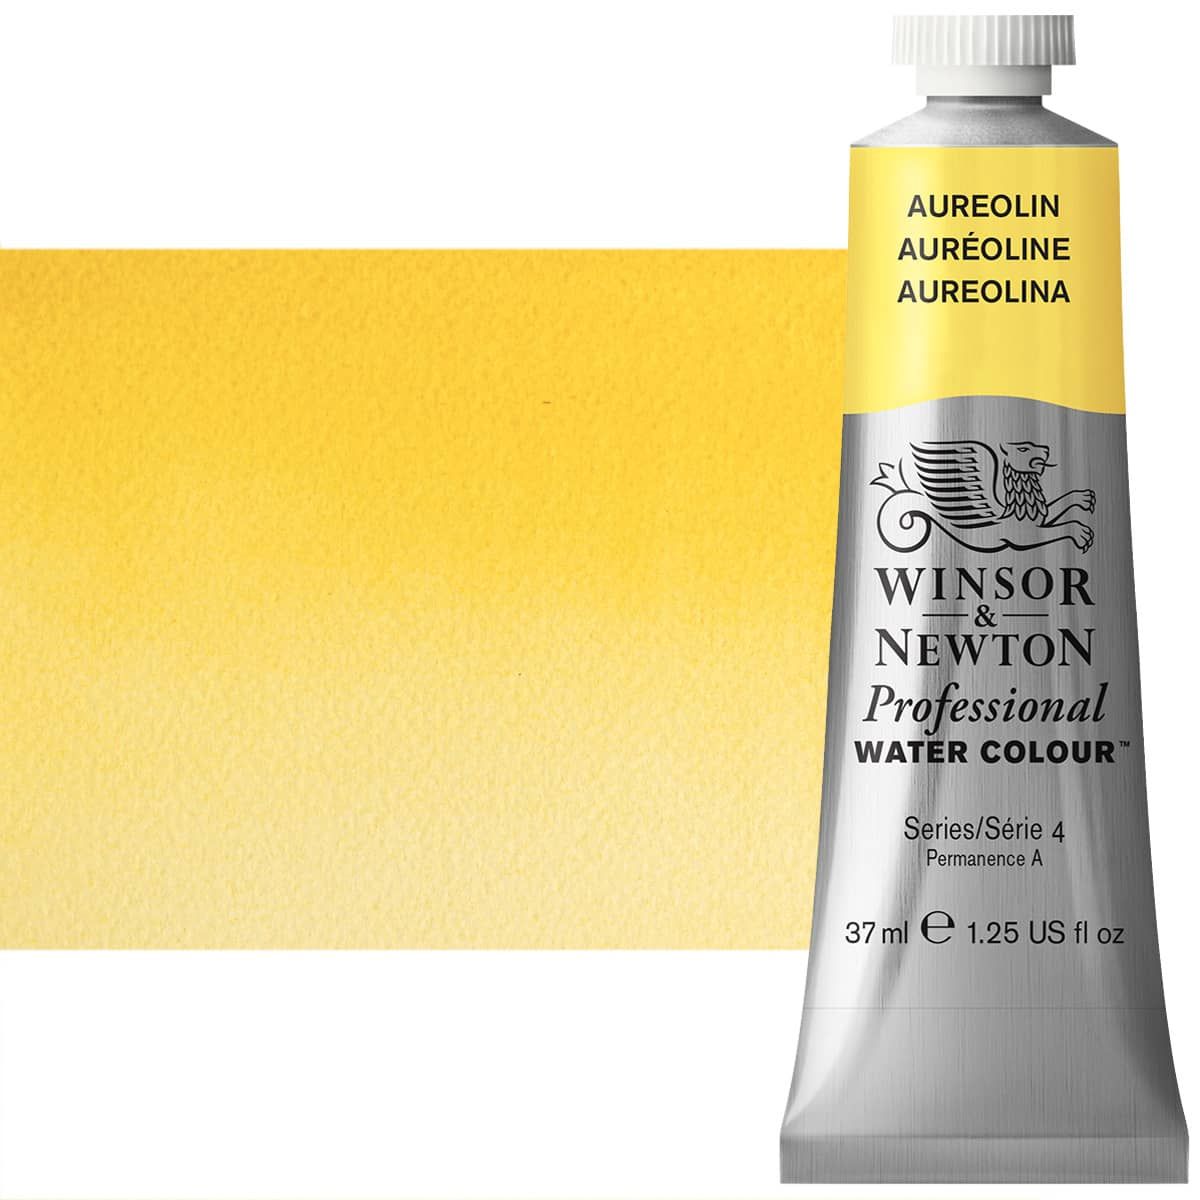 Winsor & Newton Professional Watercolor - Aureolin, 37ml Tube